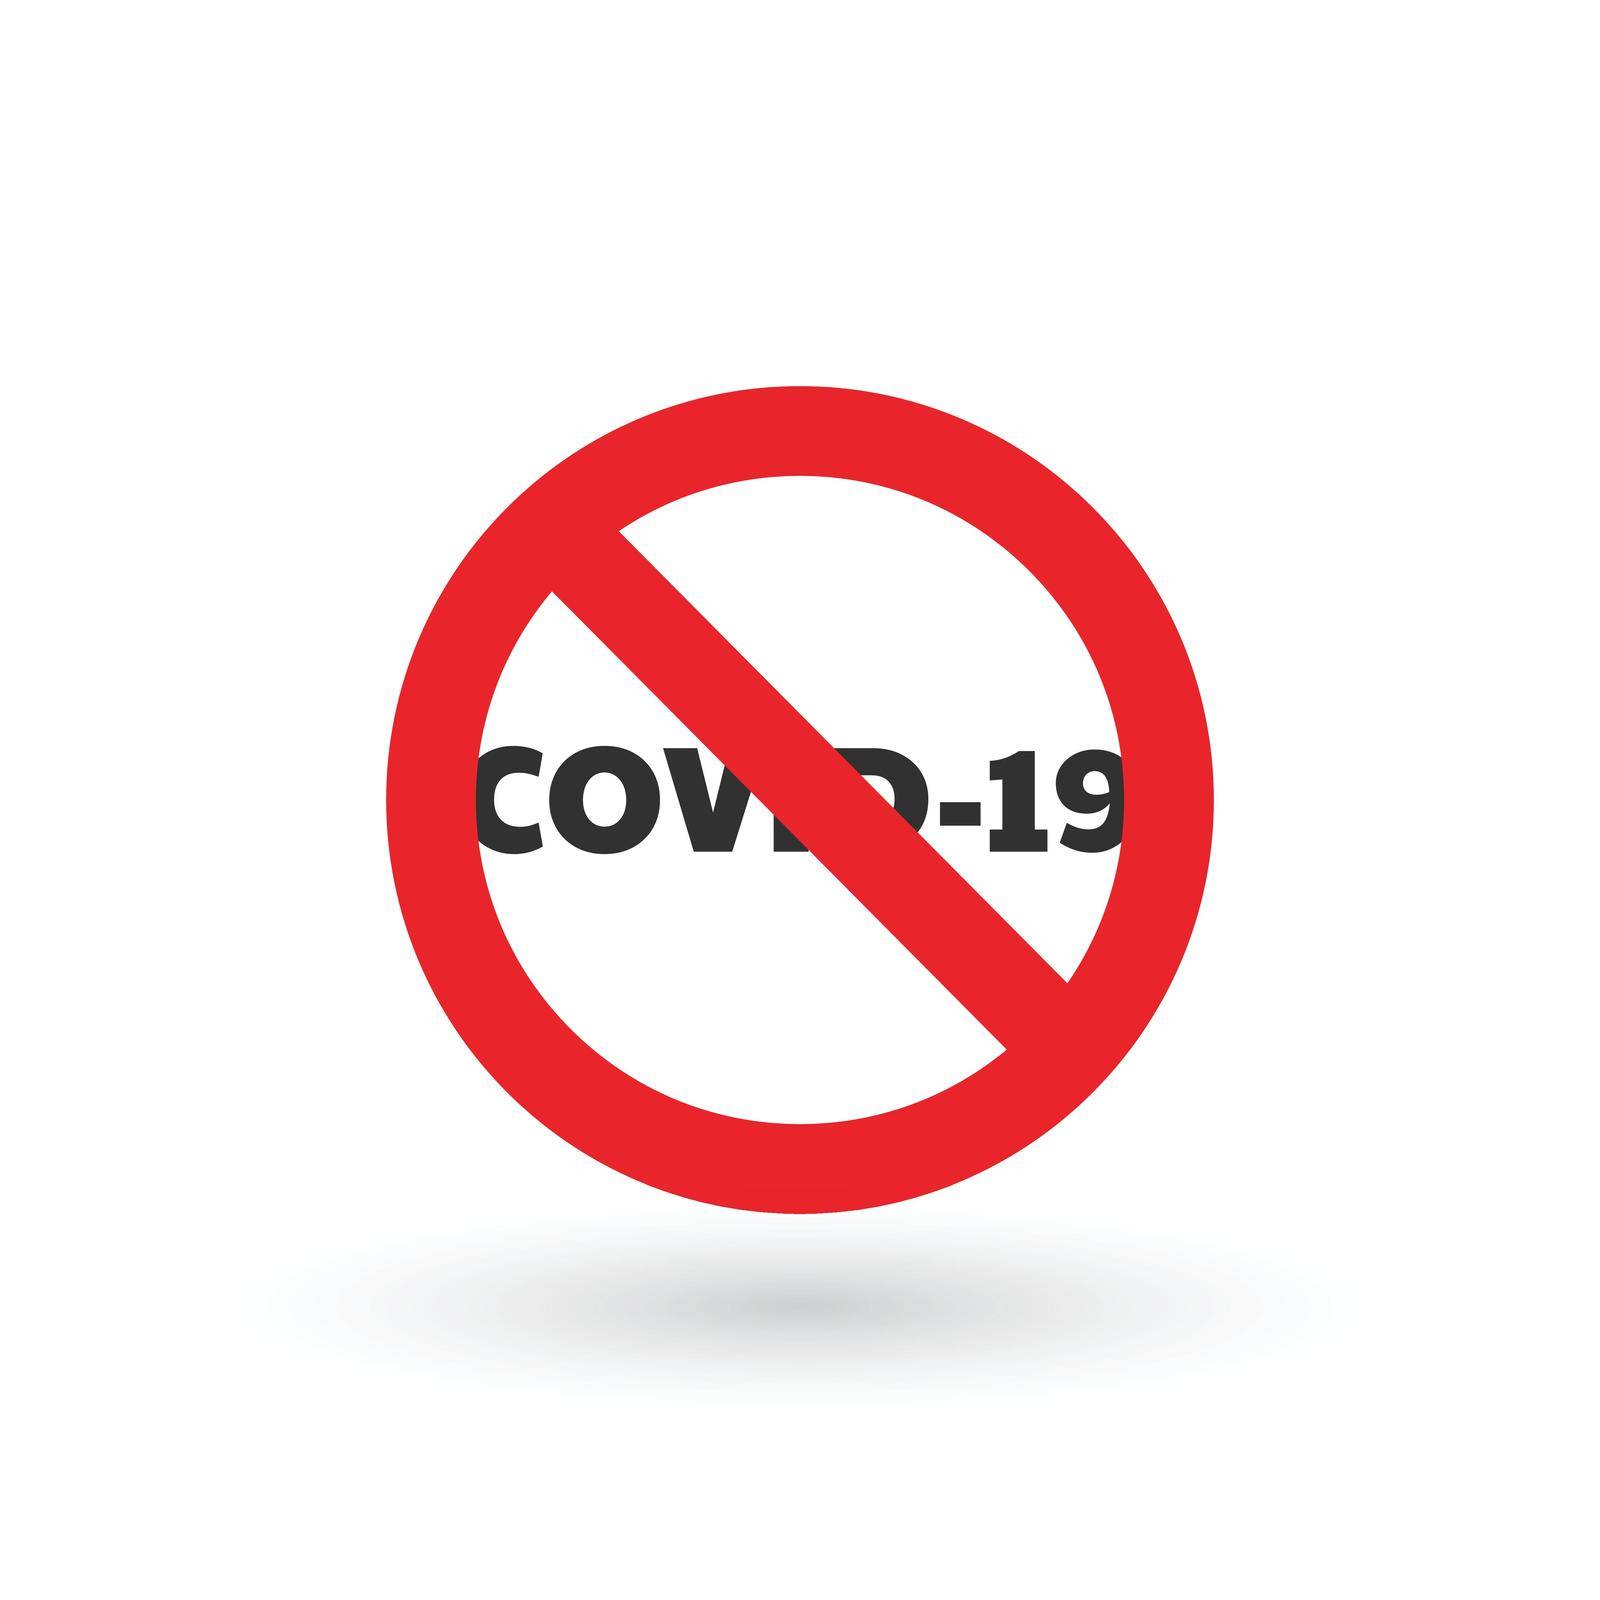 Stop coronavirus COVID-19. Dangerous chinese nCoV coronavirus outbreak. Pandemic medical concept with dangerous cells. Vector illustration